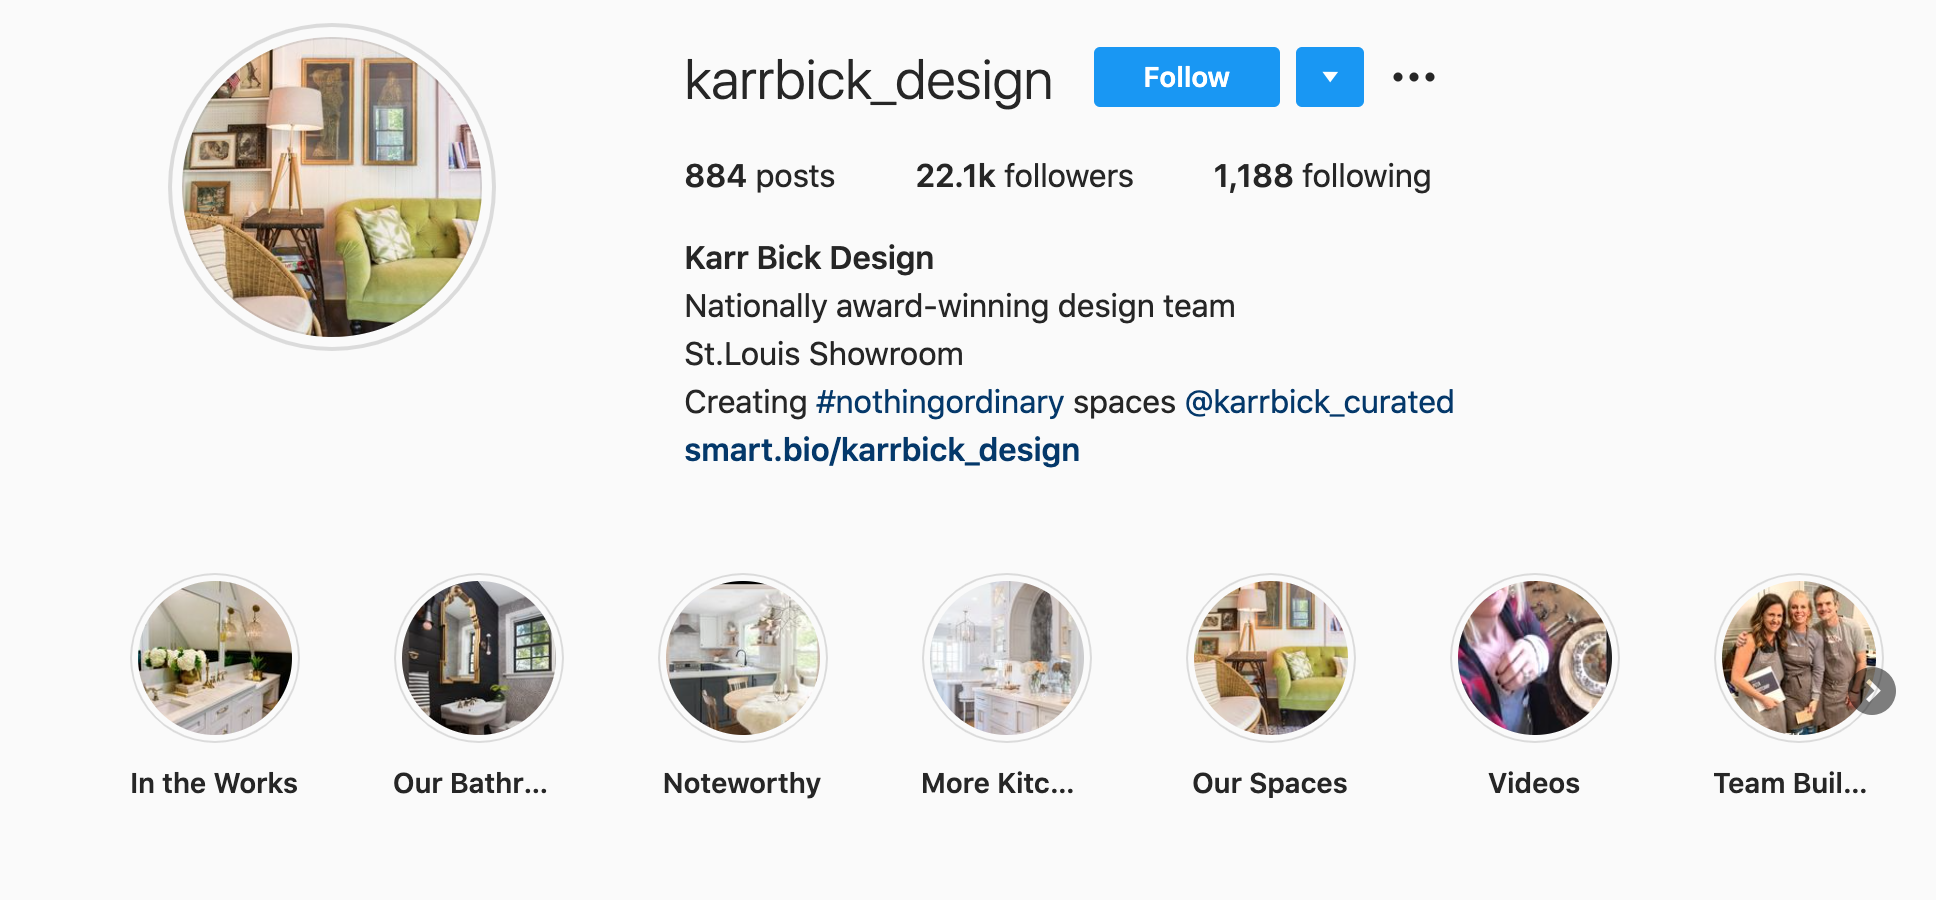 karr-bick-design-karrbick-design-instagram-profile